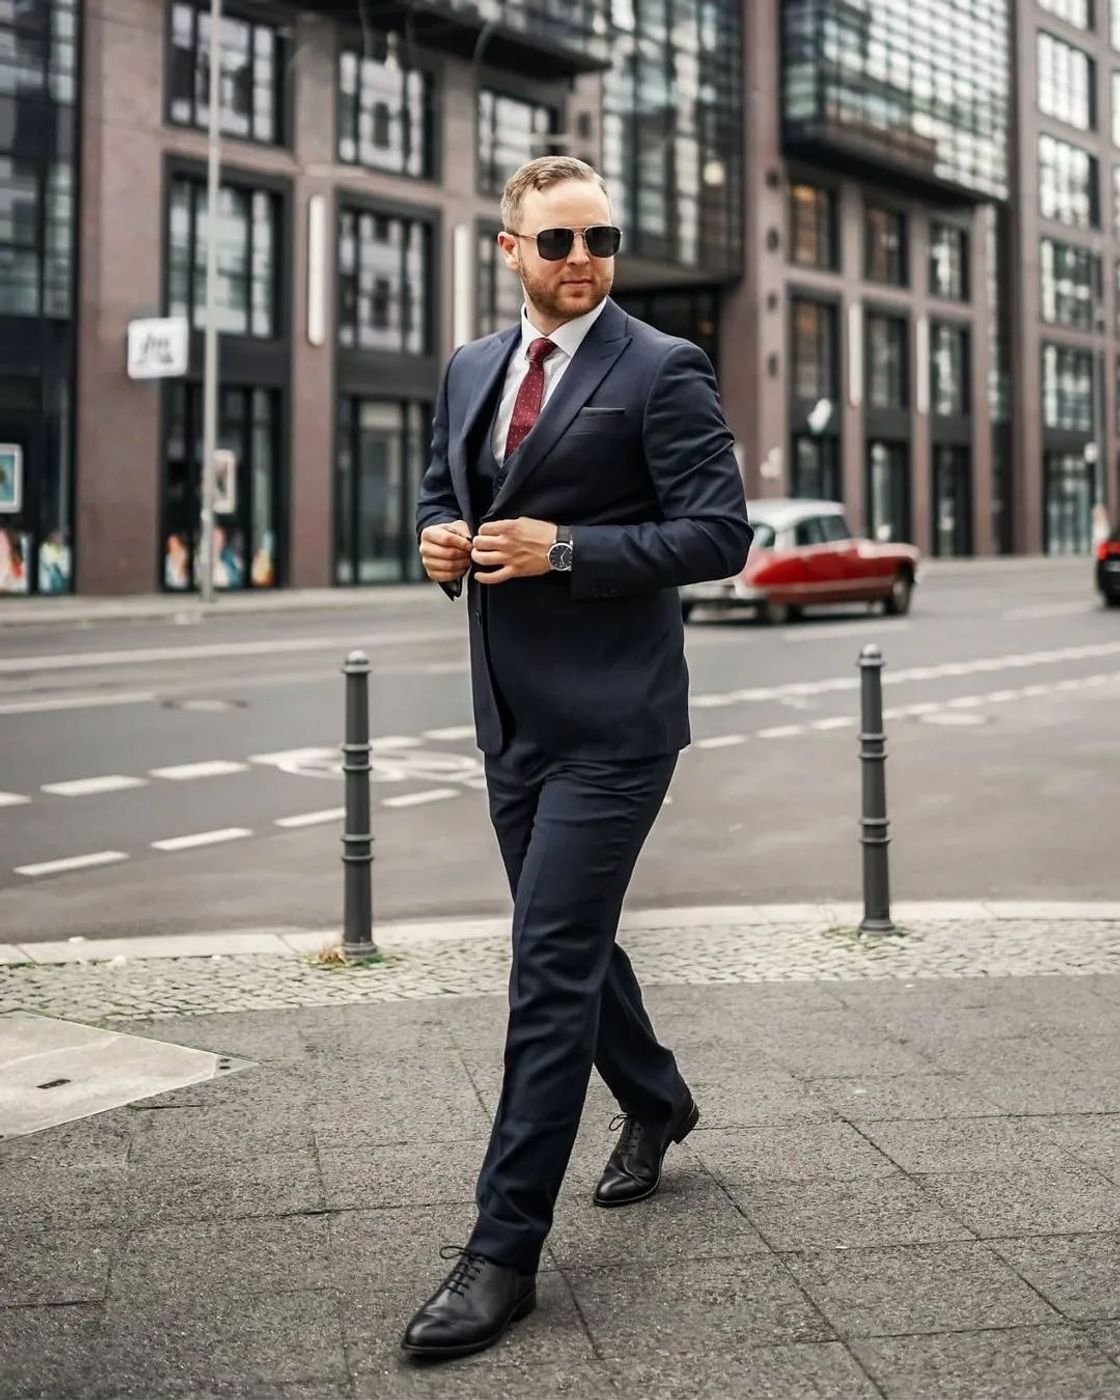 Man walking in stylish navy suit